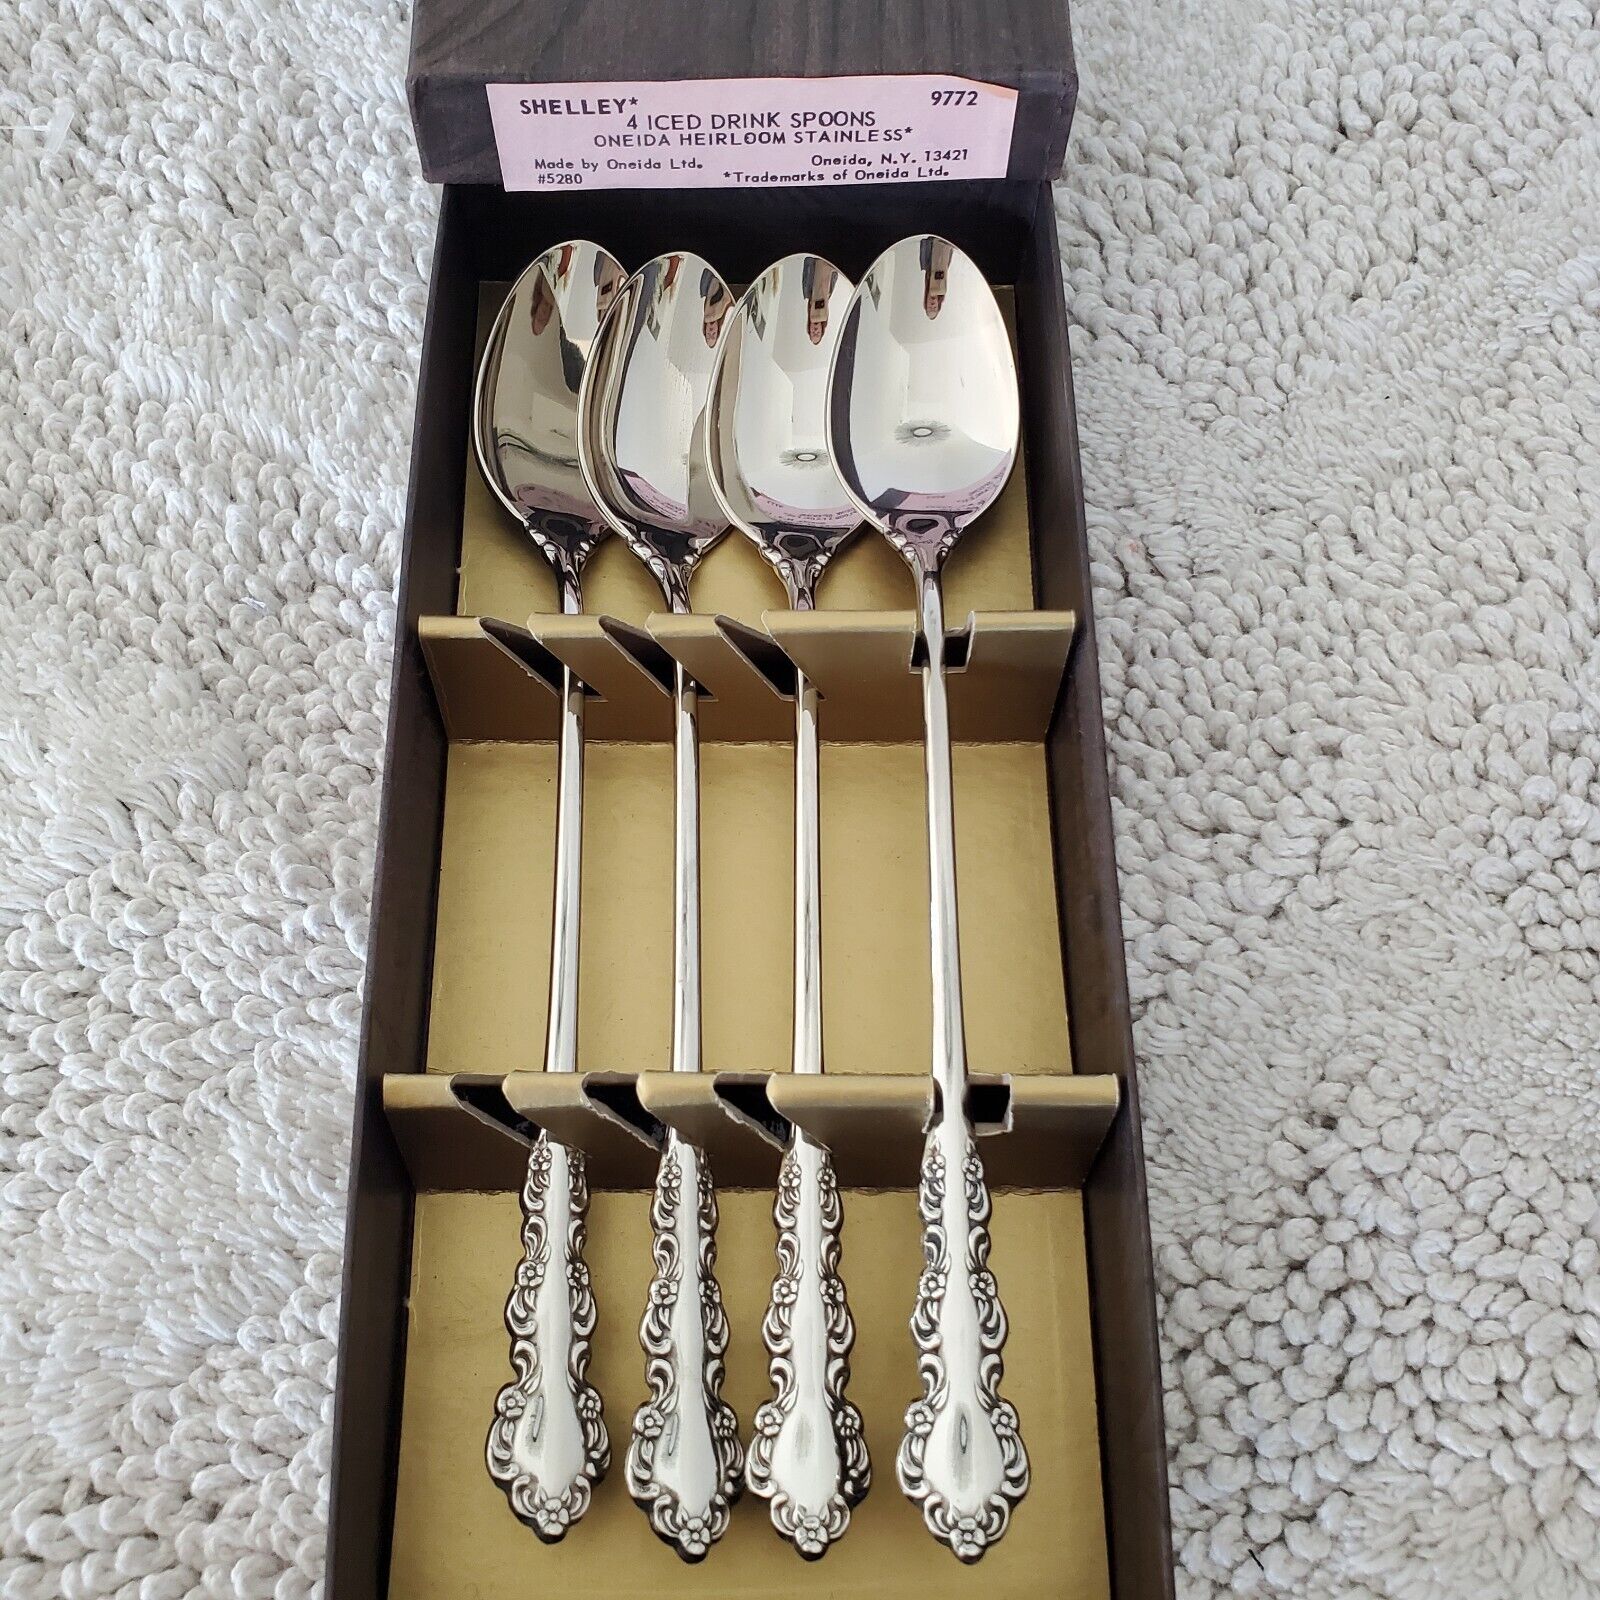 ONEIDA Shelley Heirloom (4) Iced Tea Drink Spoons Original Box Vintage #5280  